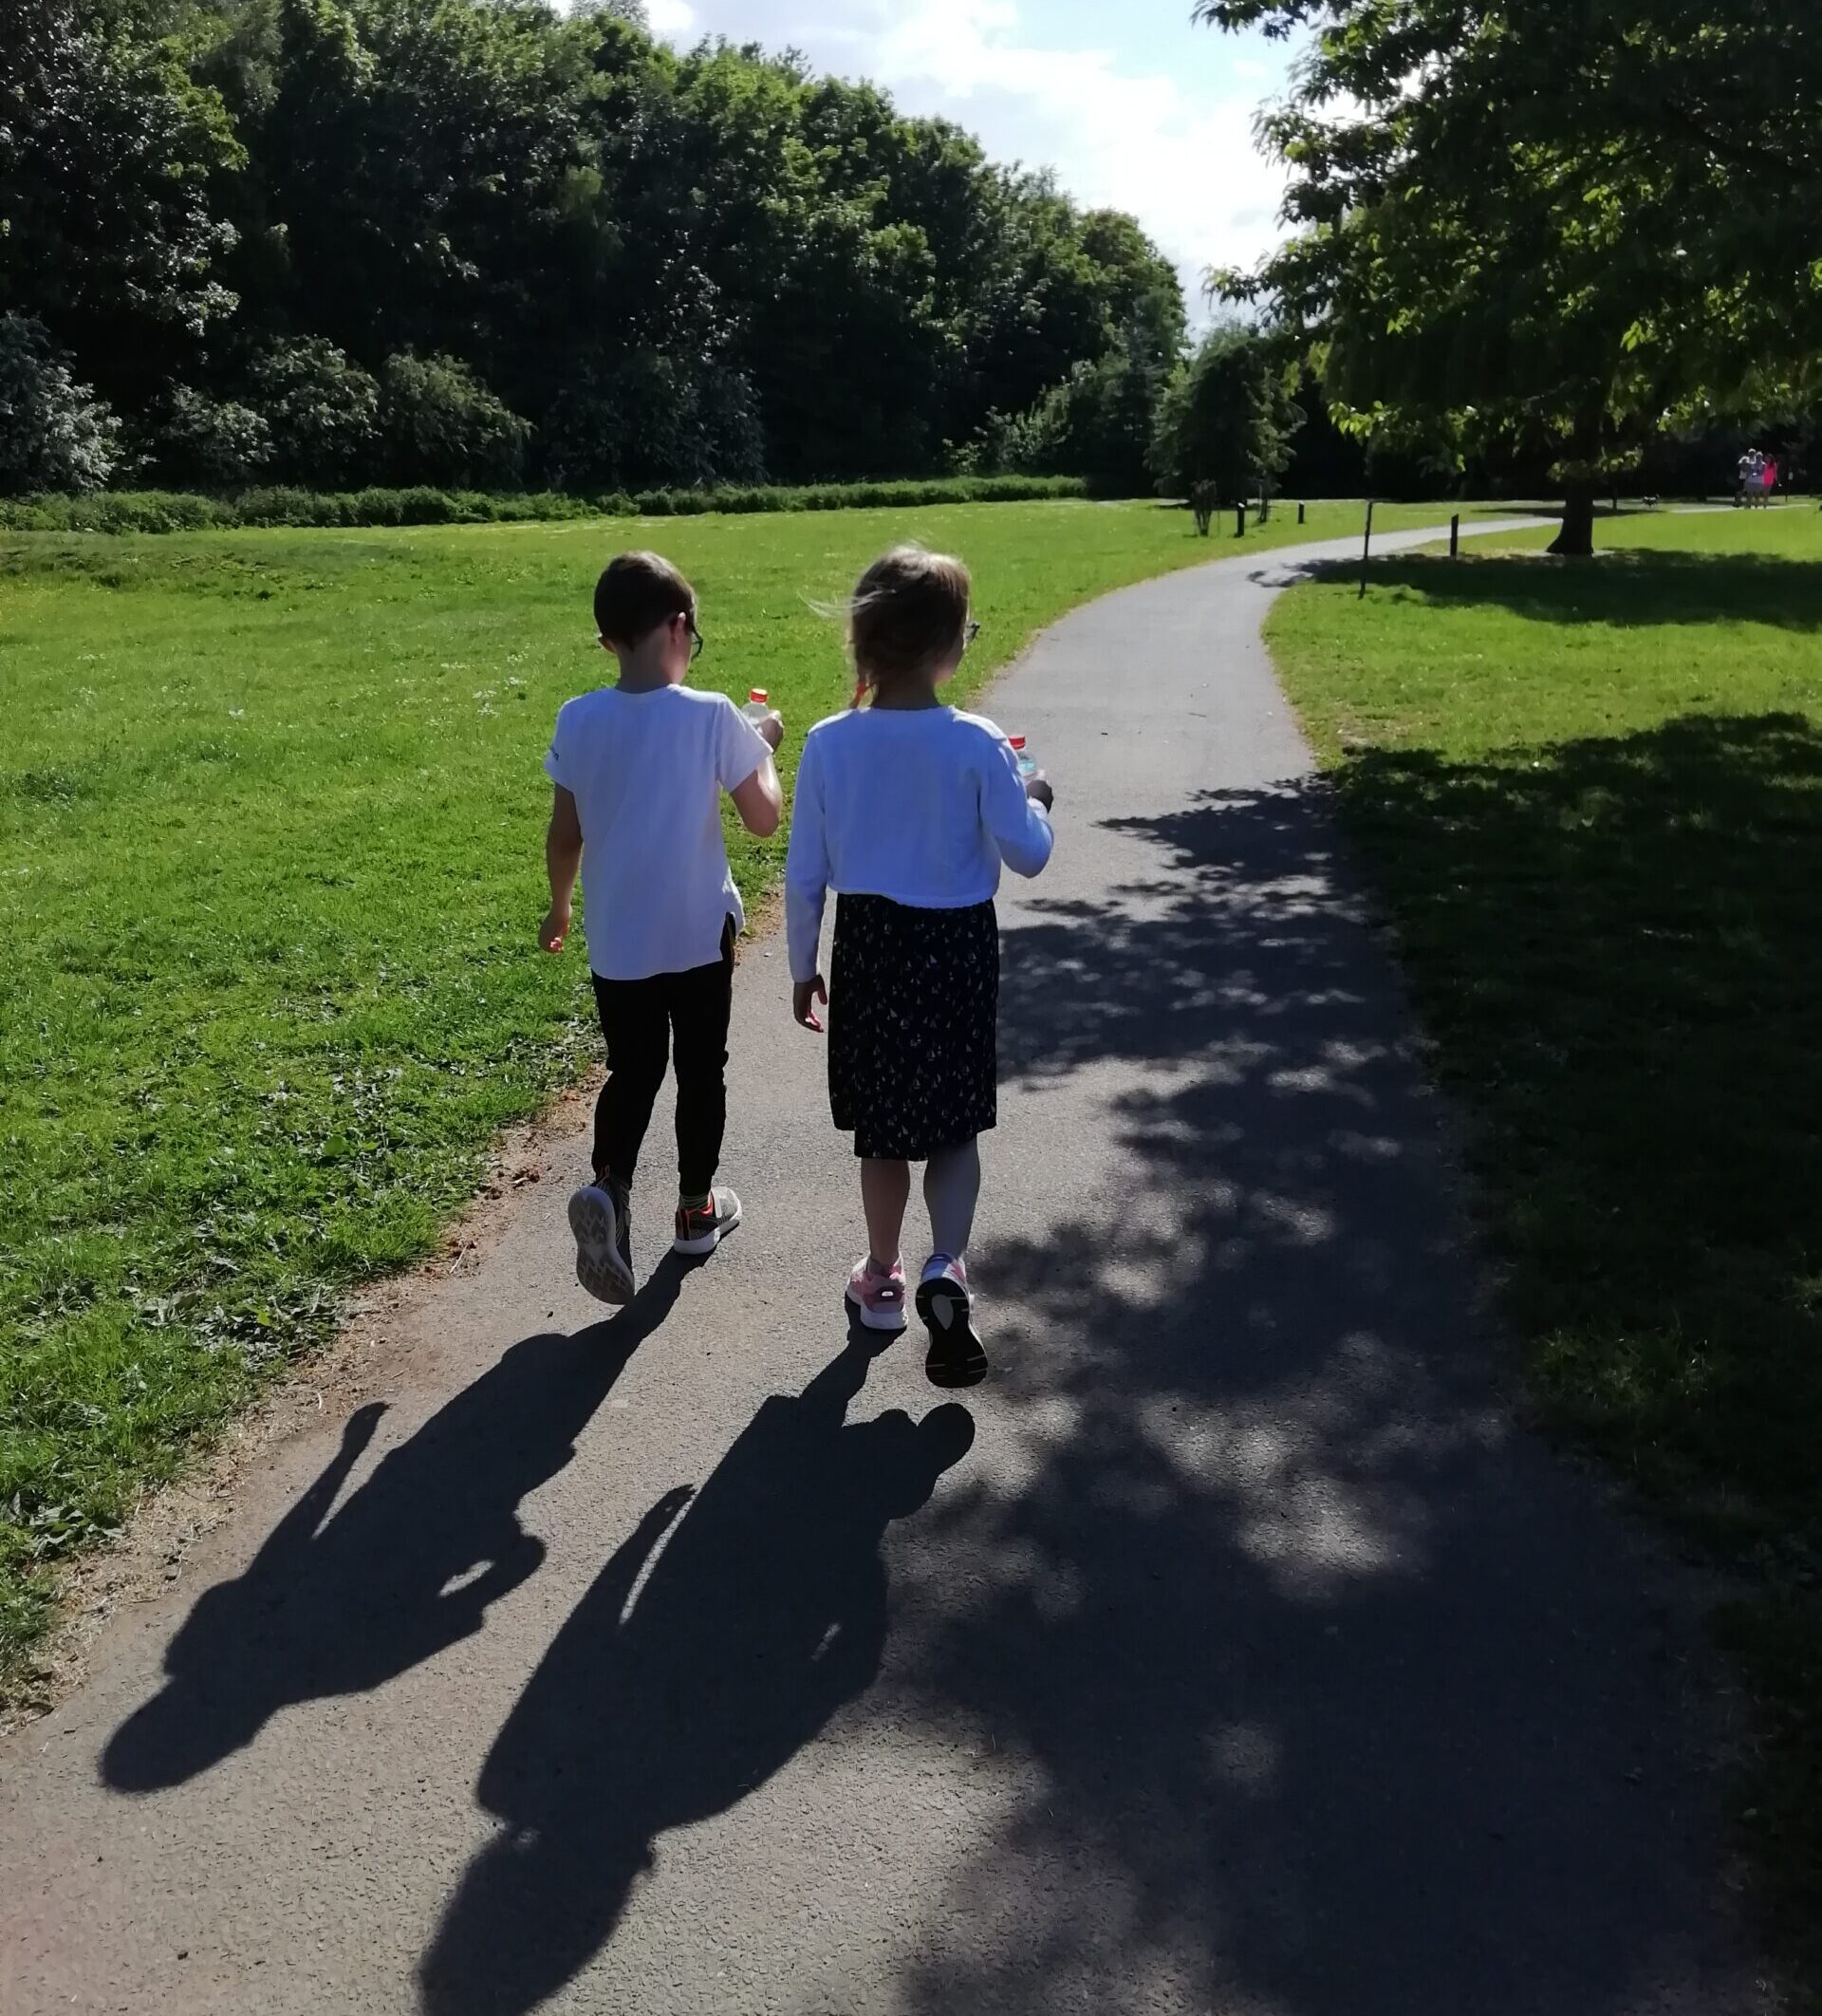 Young boy and girl in school uniforms walking away